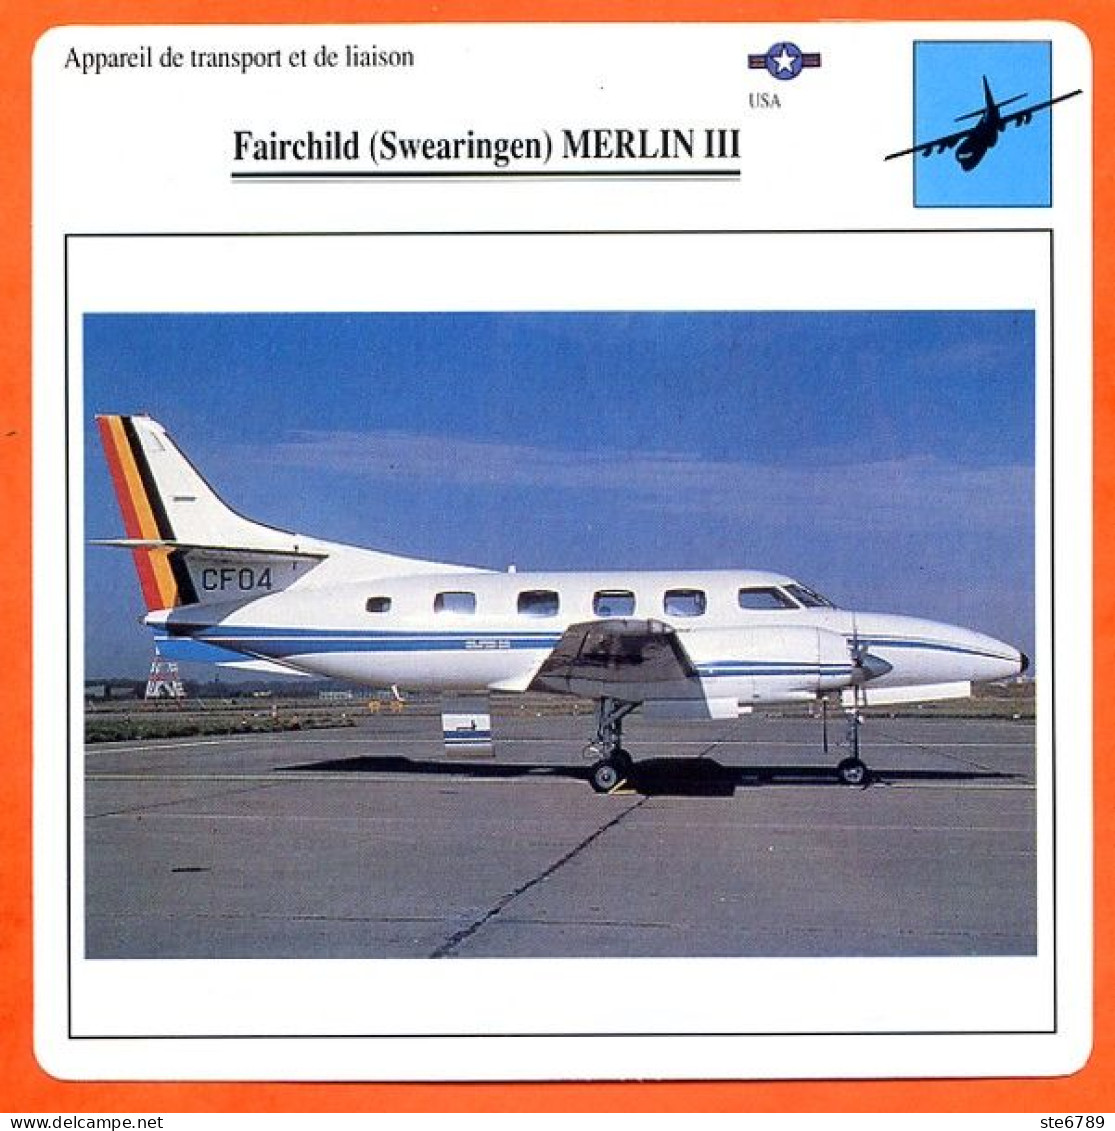 Fiche Aviation Fairchild Swearingen MERLIN III / Avion Transport Et Liaison USA Avions - Aviones